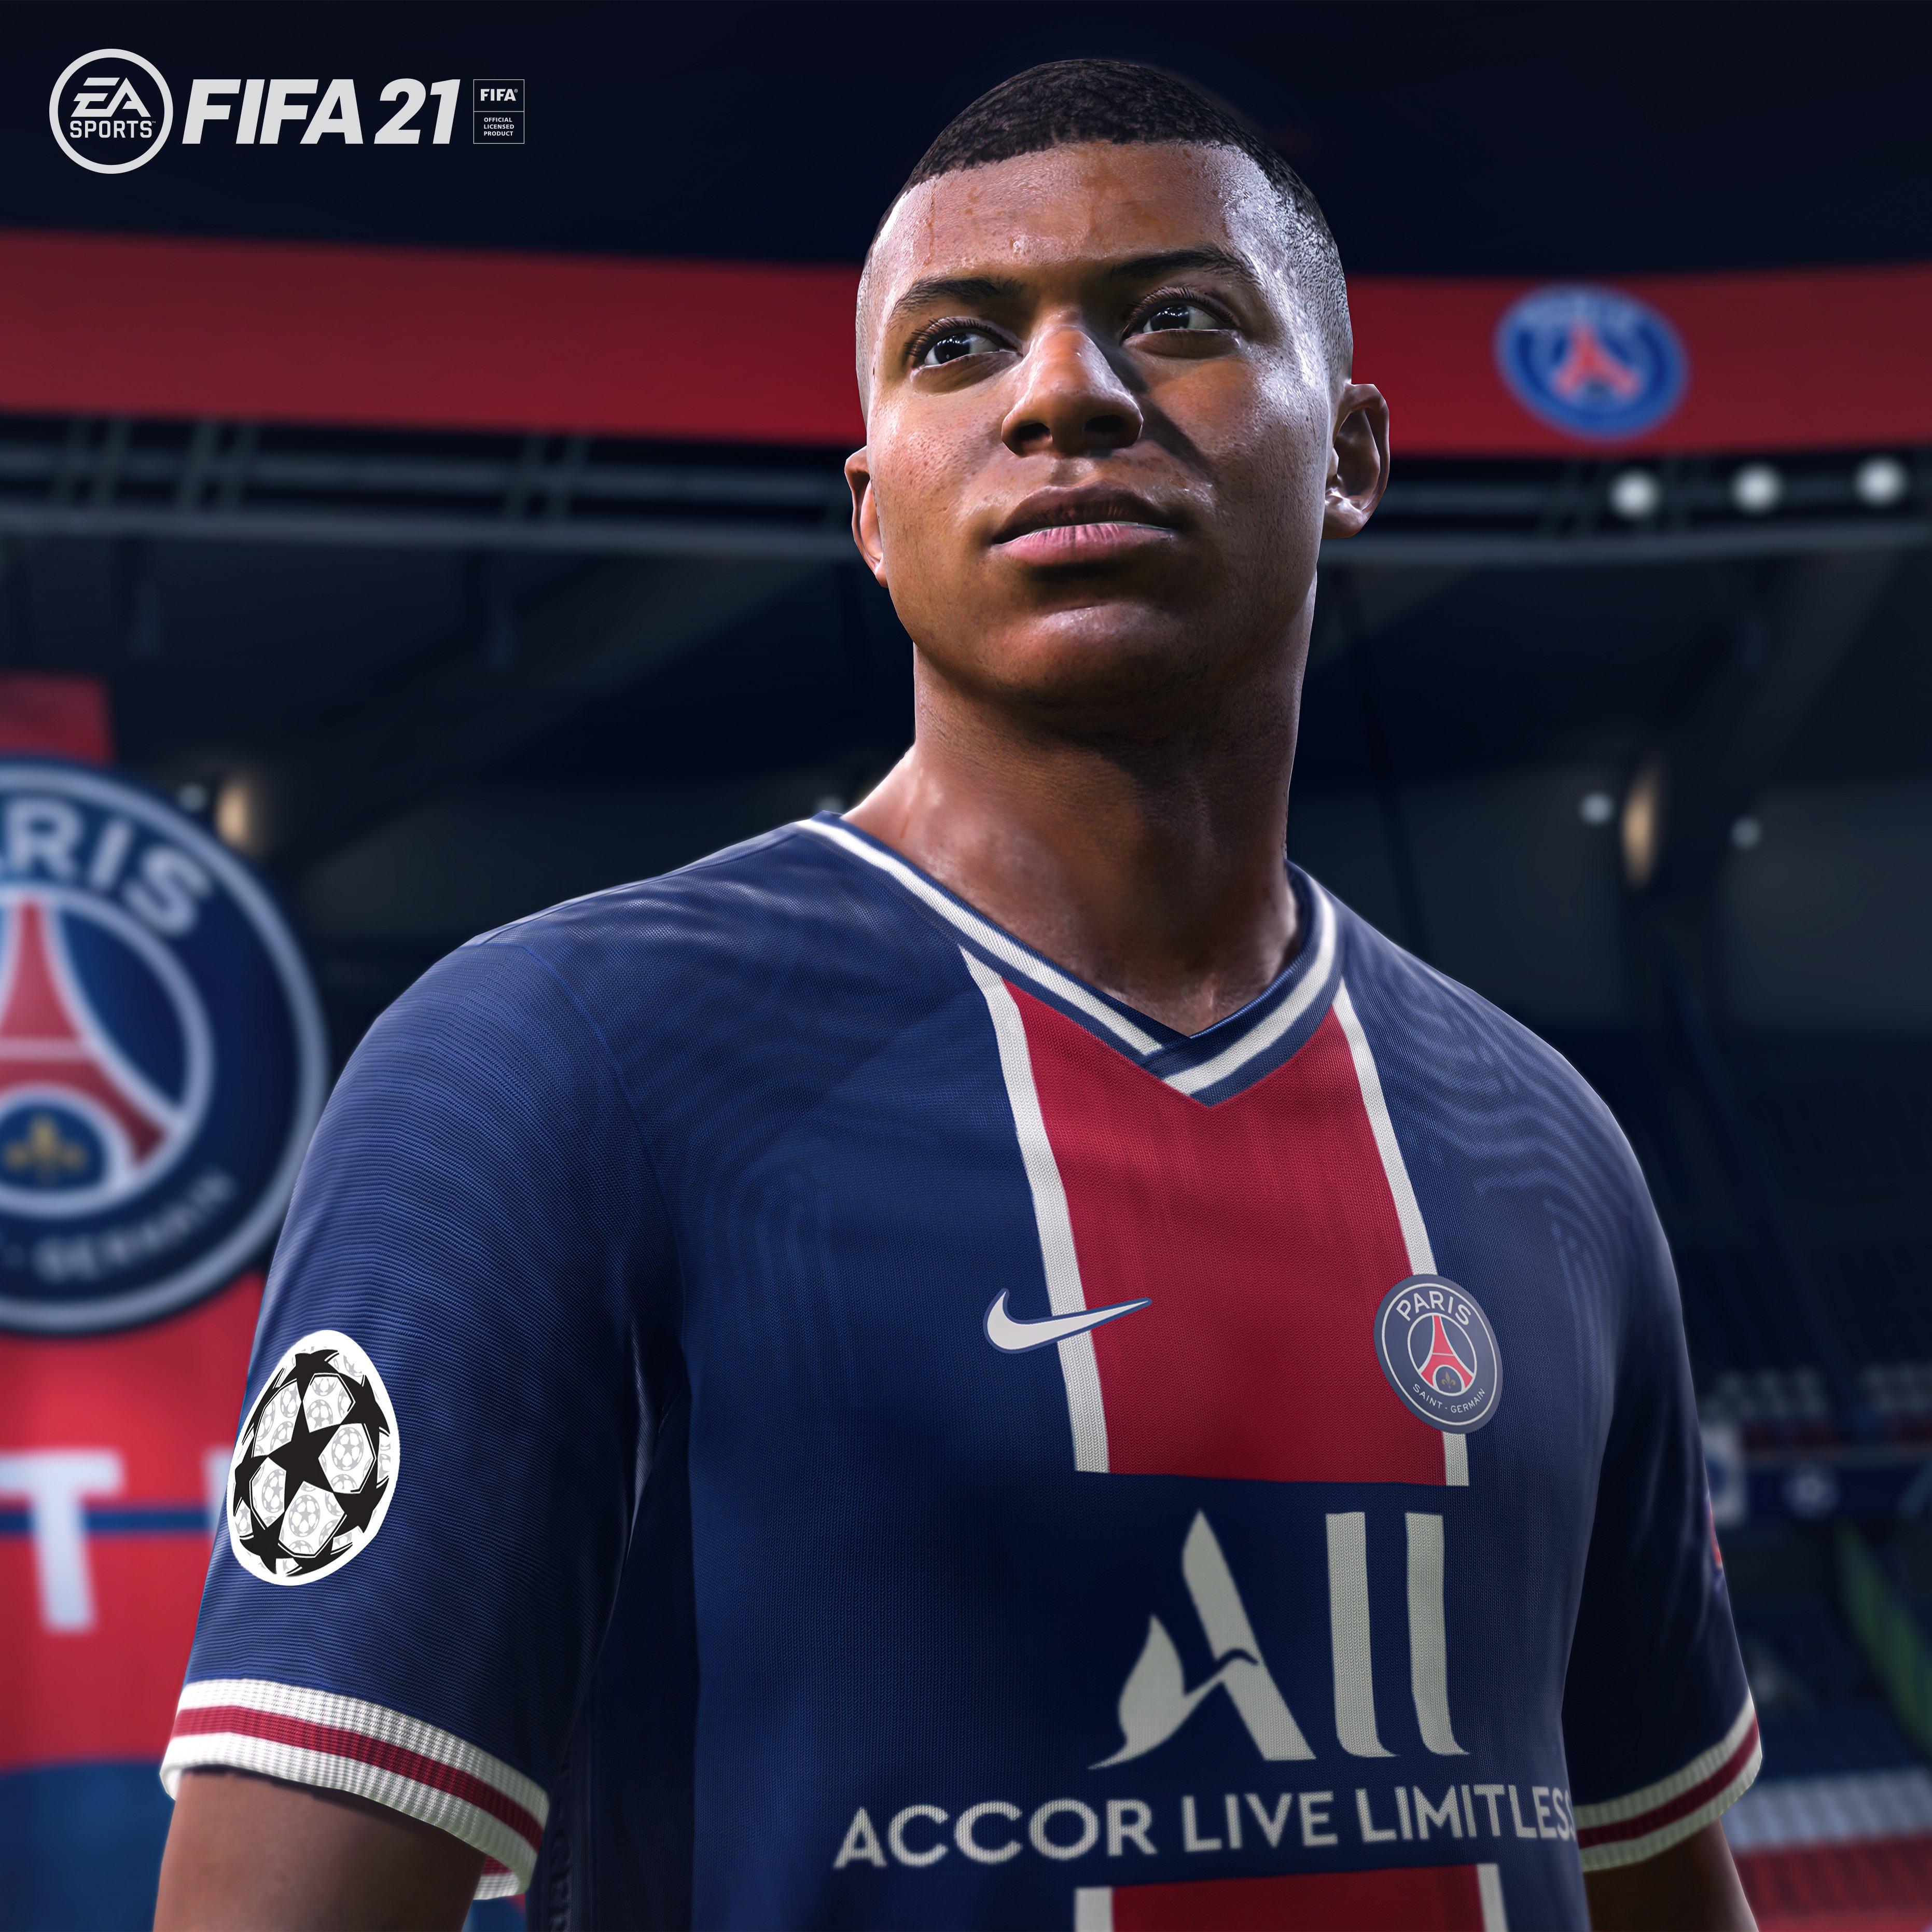 FIFA 21 - PlayStation 4/5